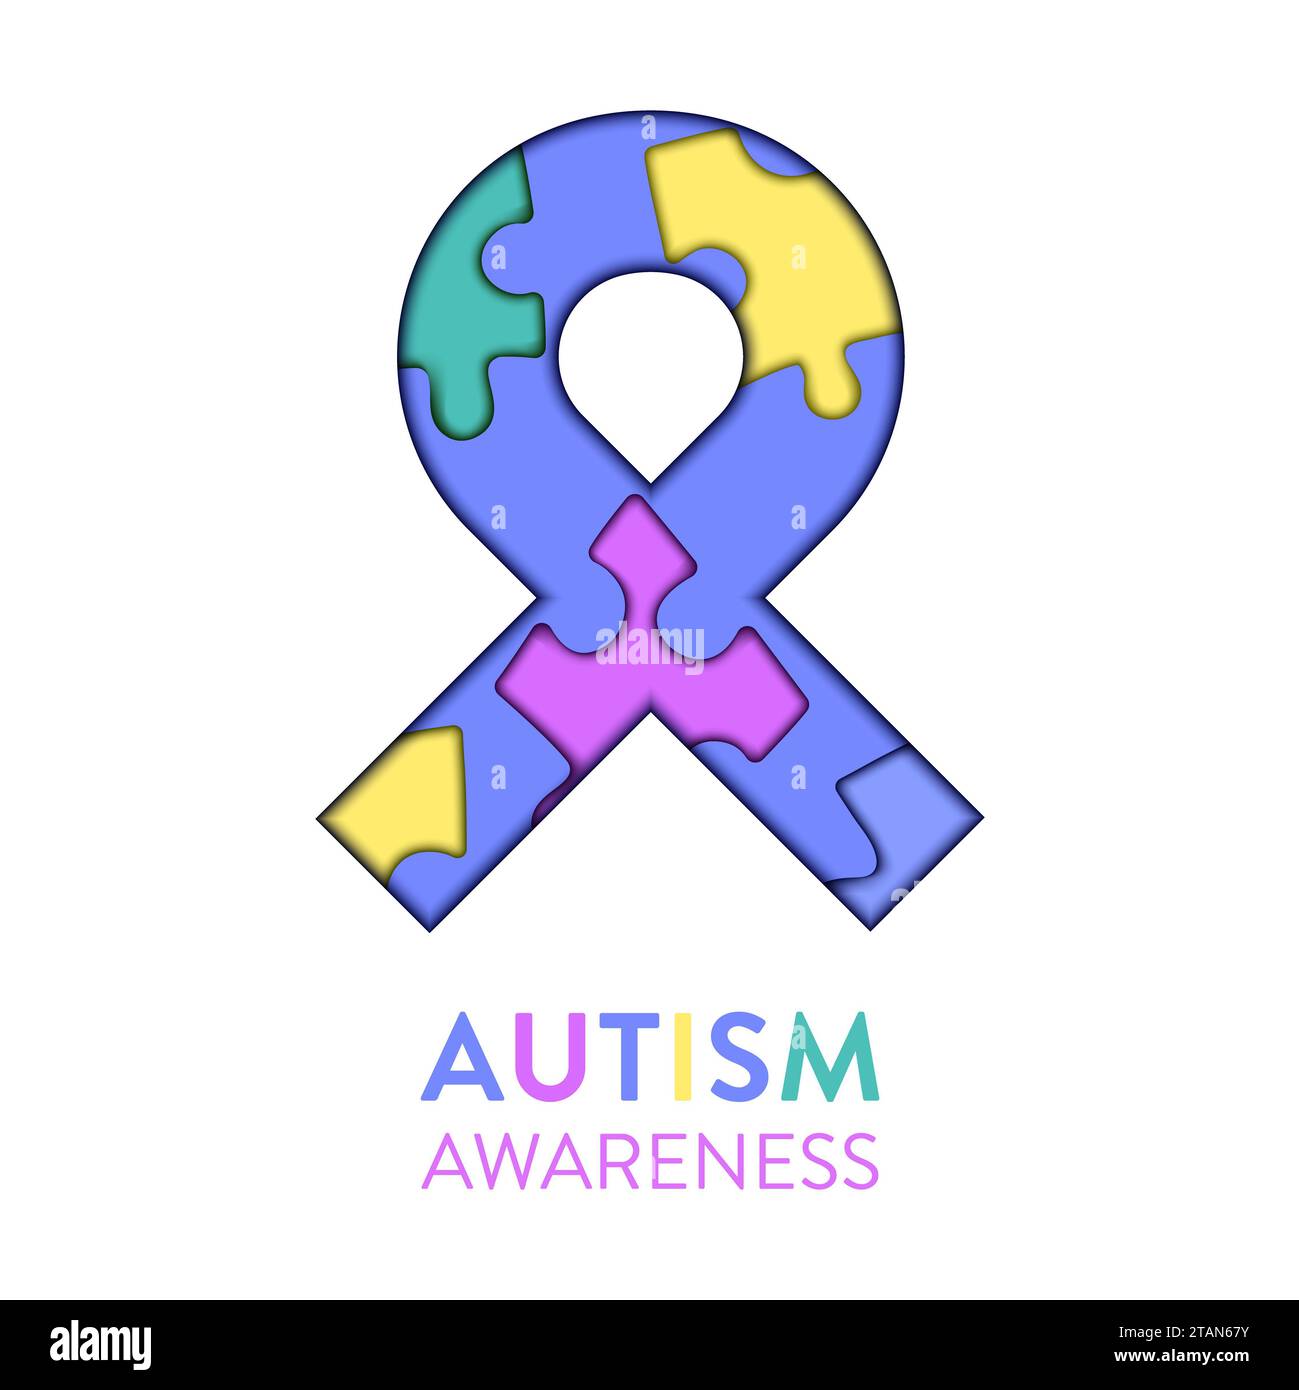 Autism awareness ribbon, conceptual illustration Stock Photo